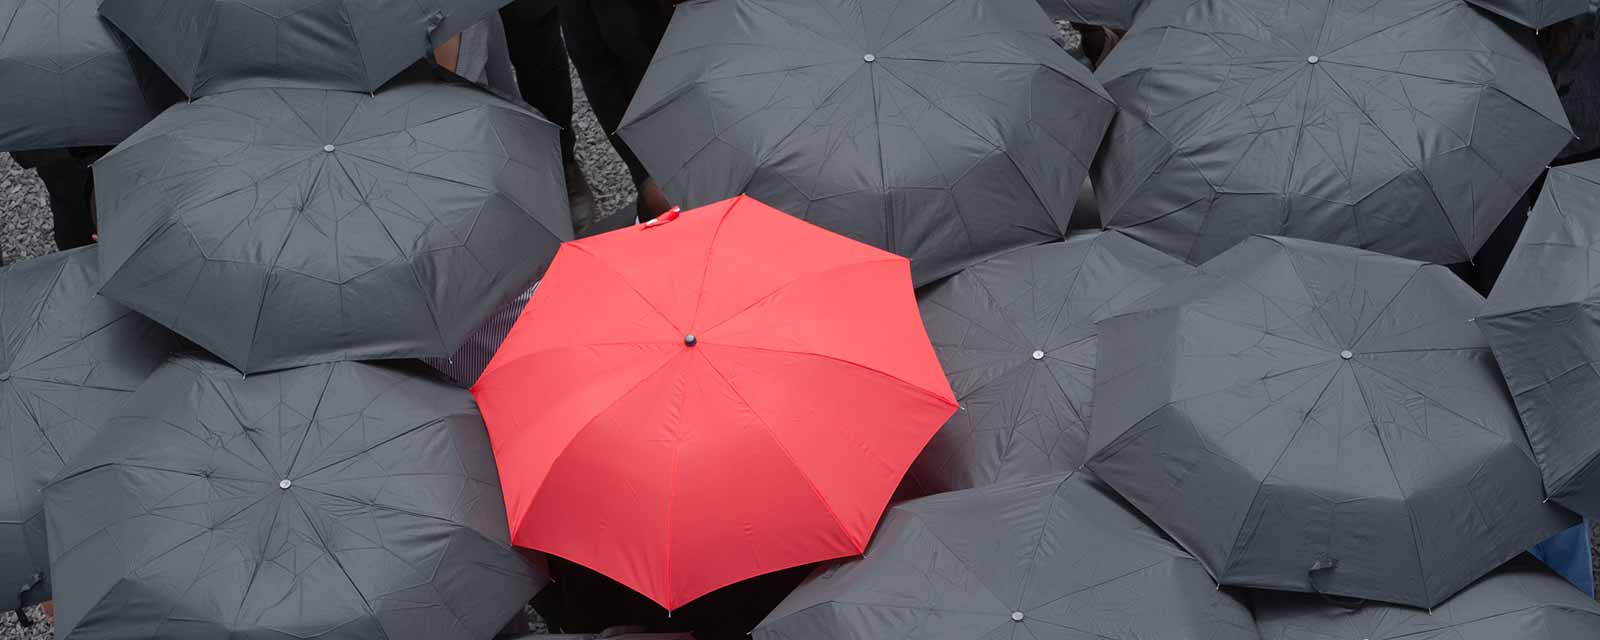 red umbrella in a sea of black umbrellas